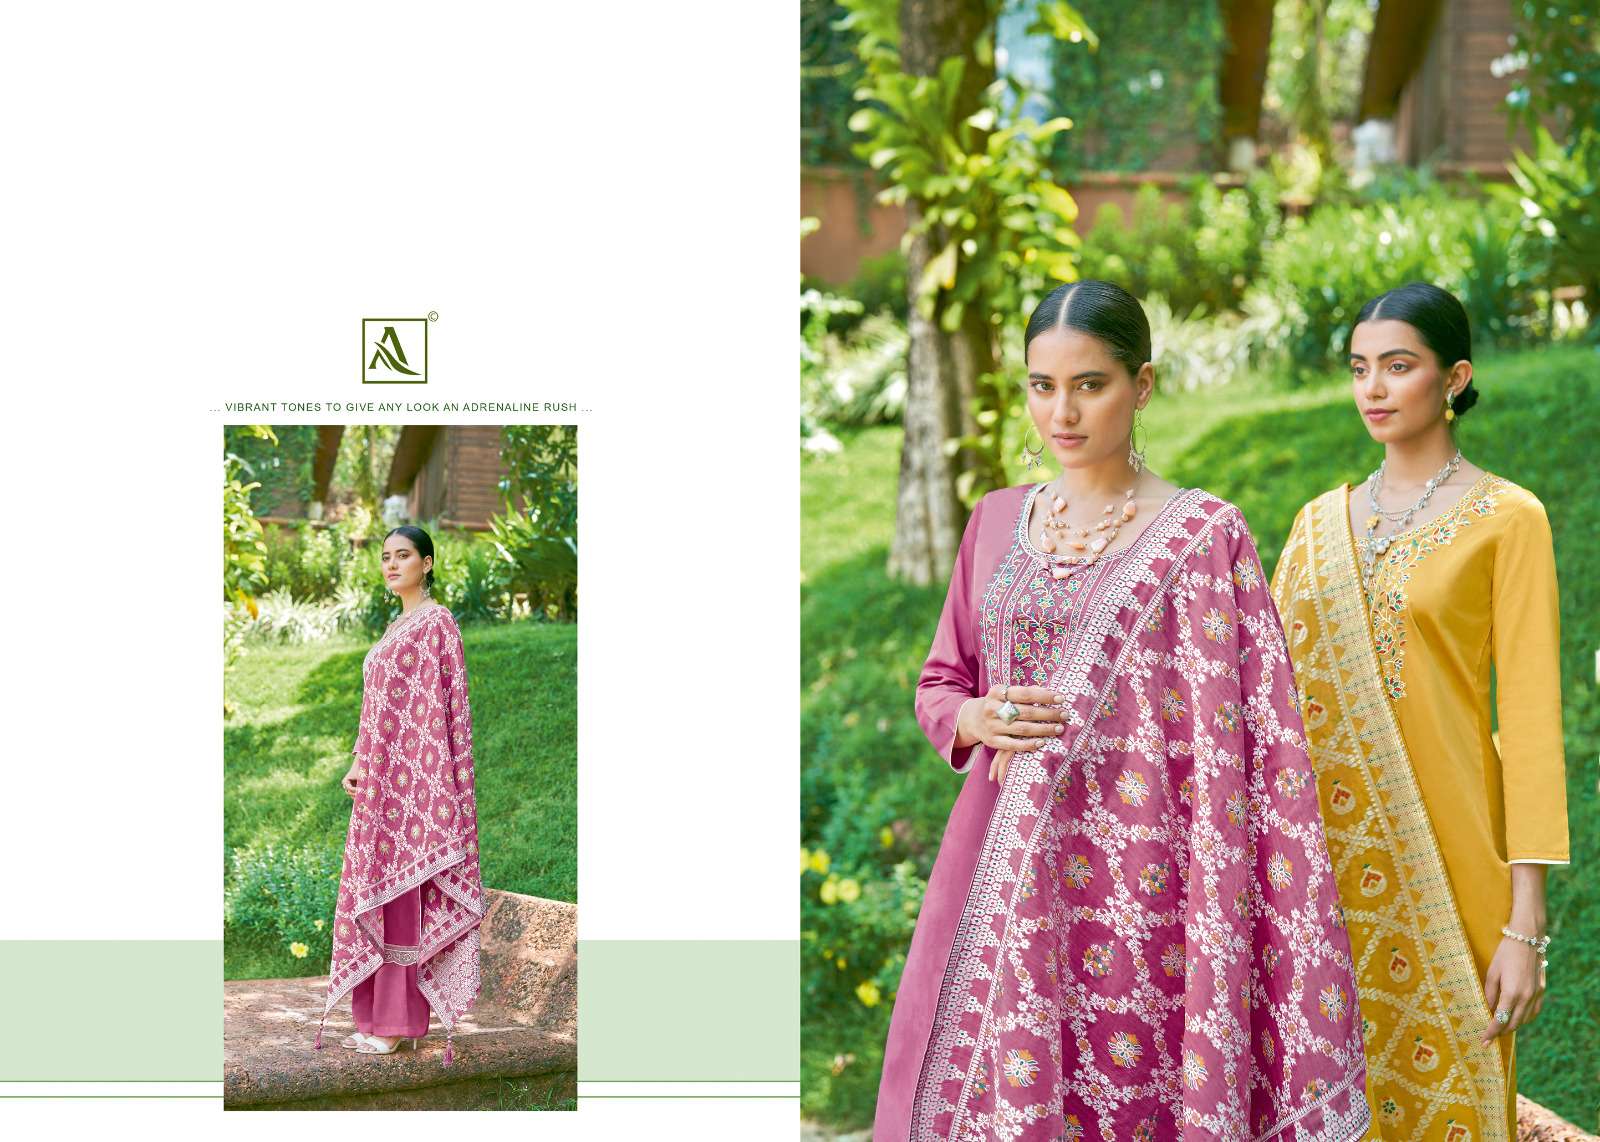 alok suit lakhnavi touch 1282-001-006 series latest designer salwar kameez wholesaler surat gujarat